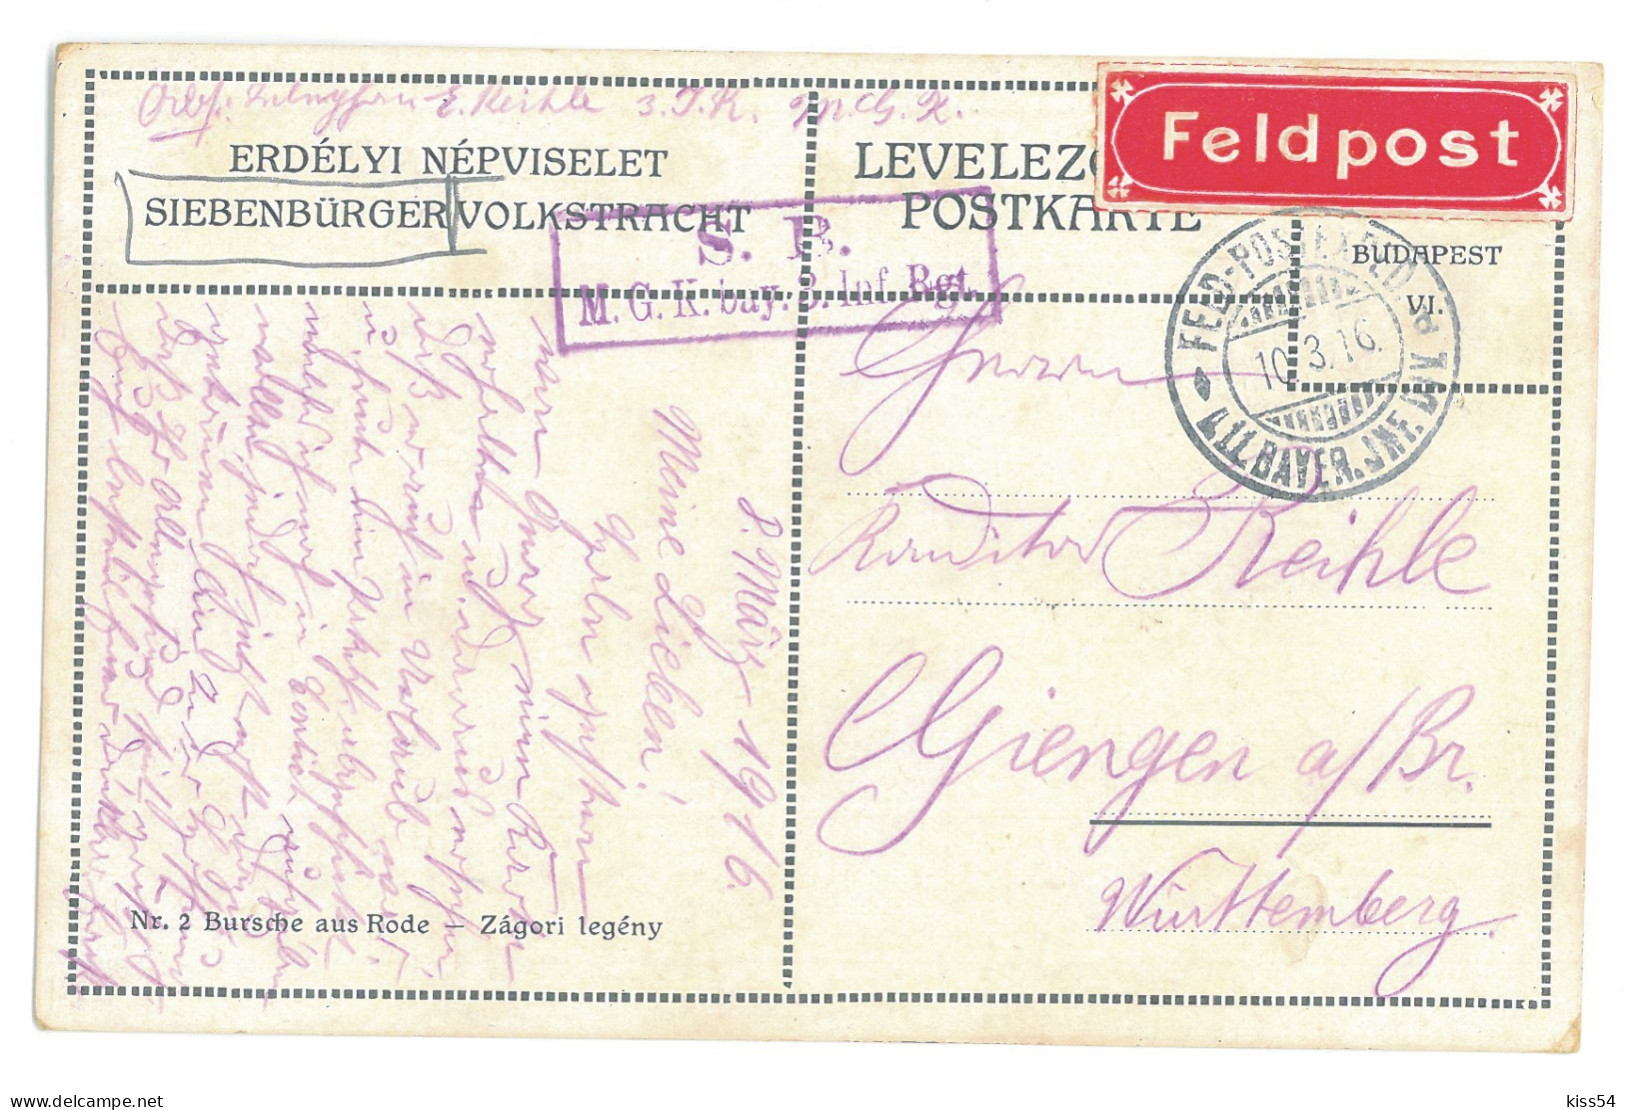 RO 35 - 18718 Ardeal ETHNIC FAMILY, Romania - Old Postcard, CENSOR - Used - 1916 - Rumänien